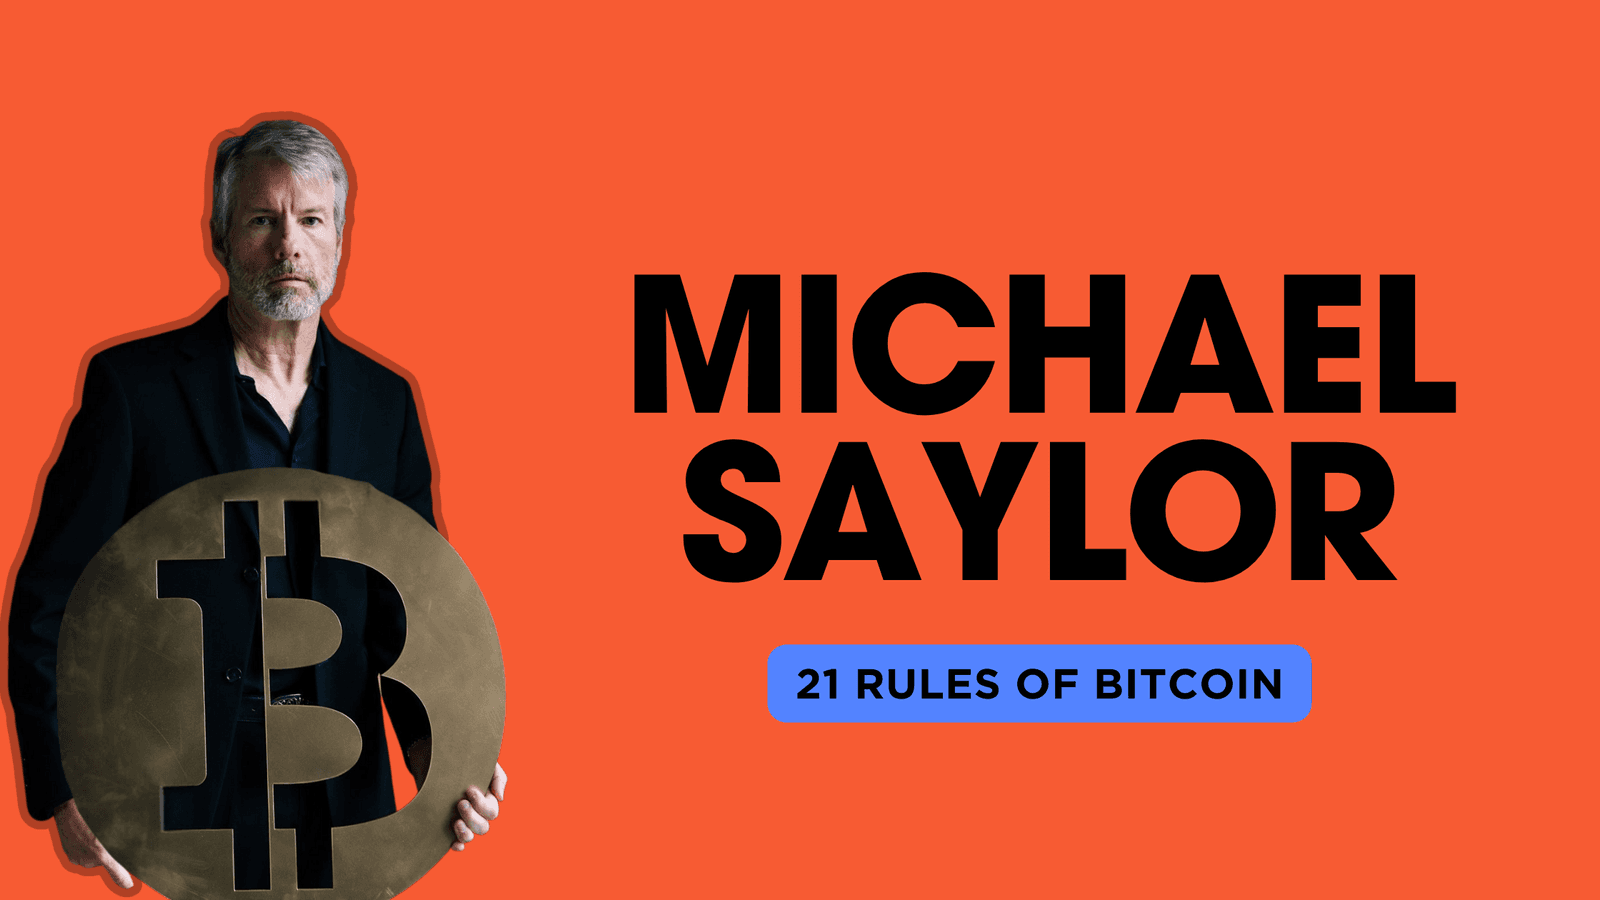 Michael Saylor’s “21 Rules Of Bitcoin”